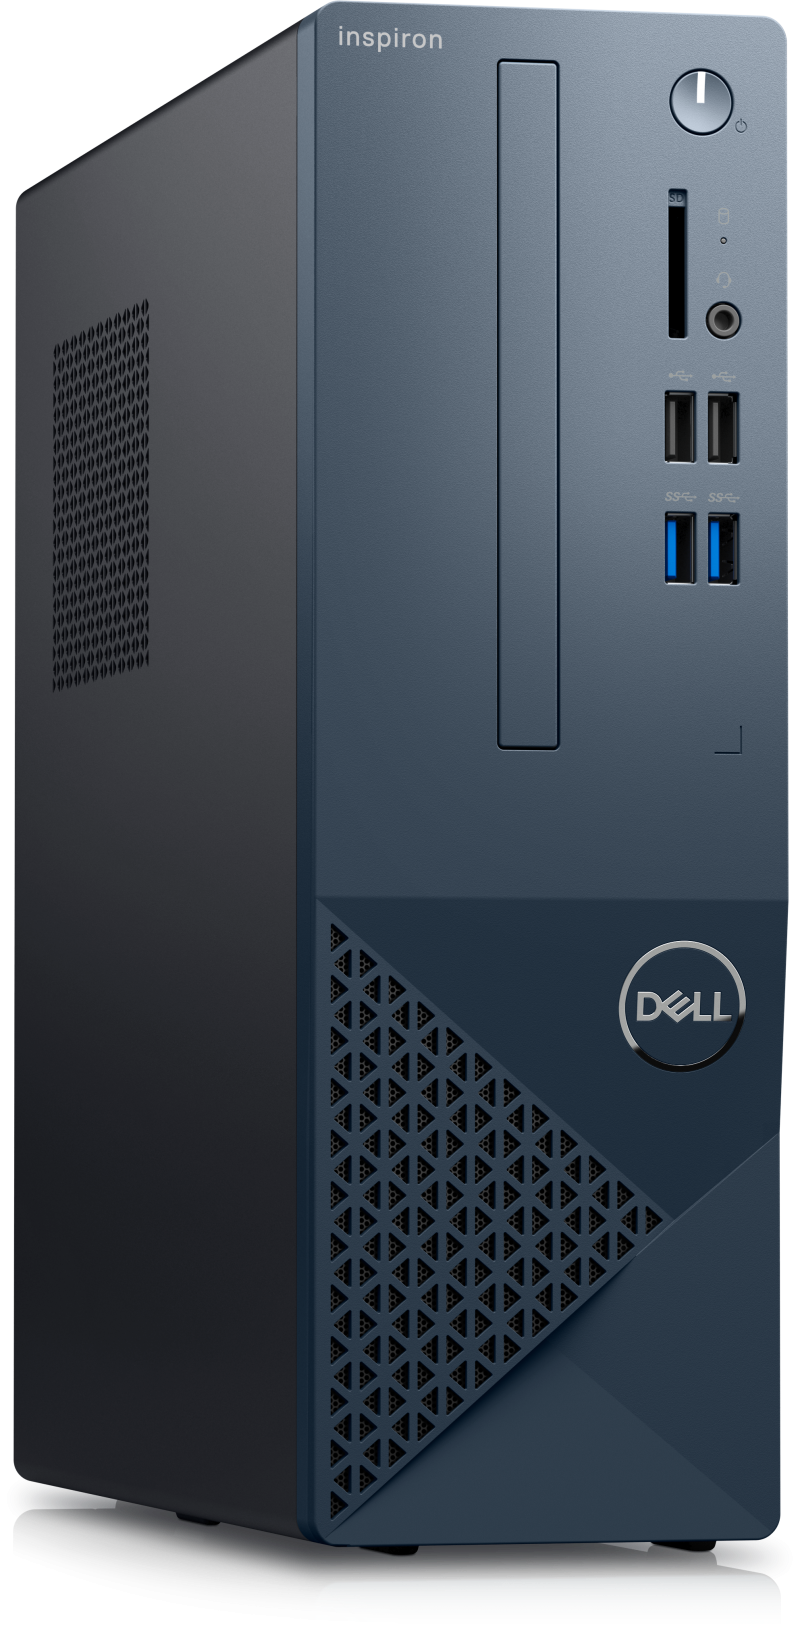 Dell Inspiron 3020 Small Desktop - Refurbished DIM0153818-R0024126-SA DIM0153818-R0024126-SA